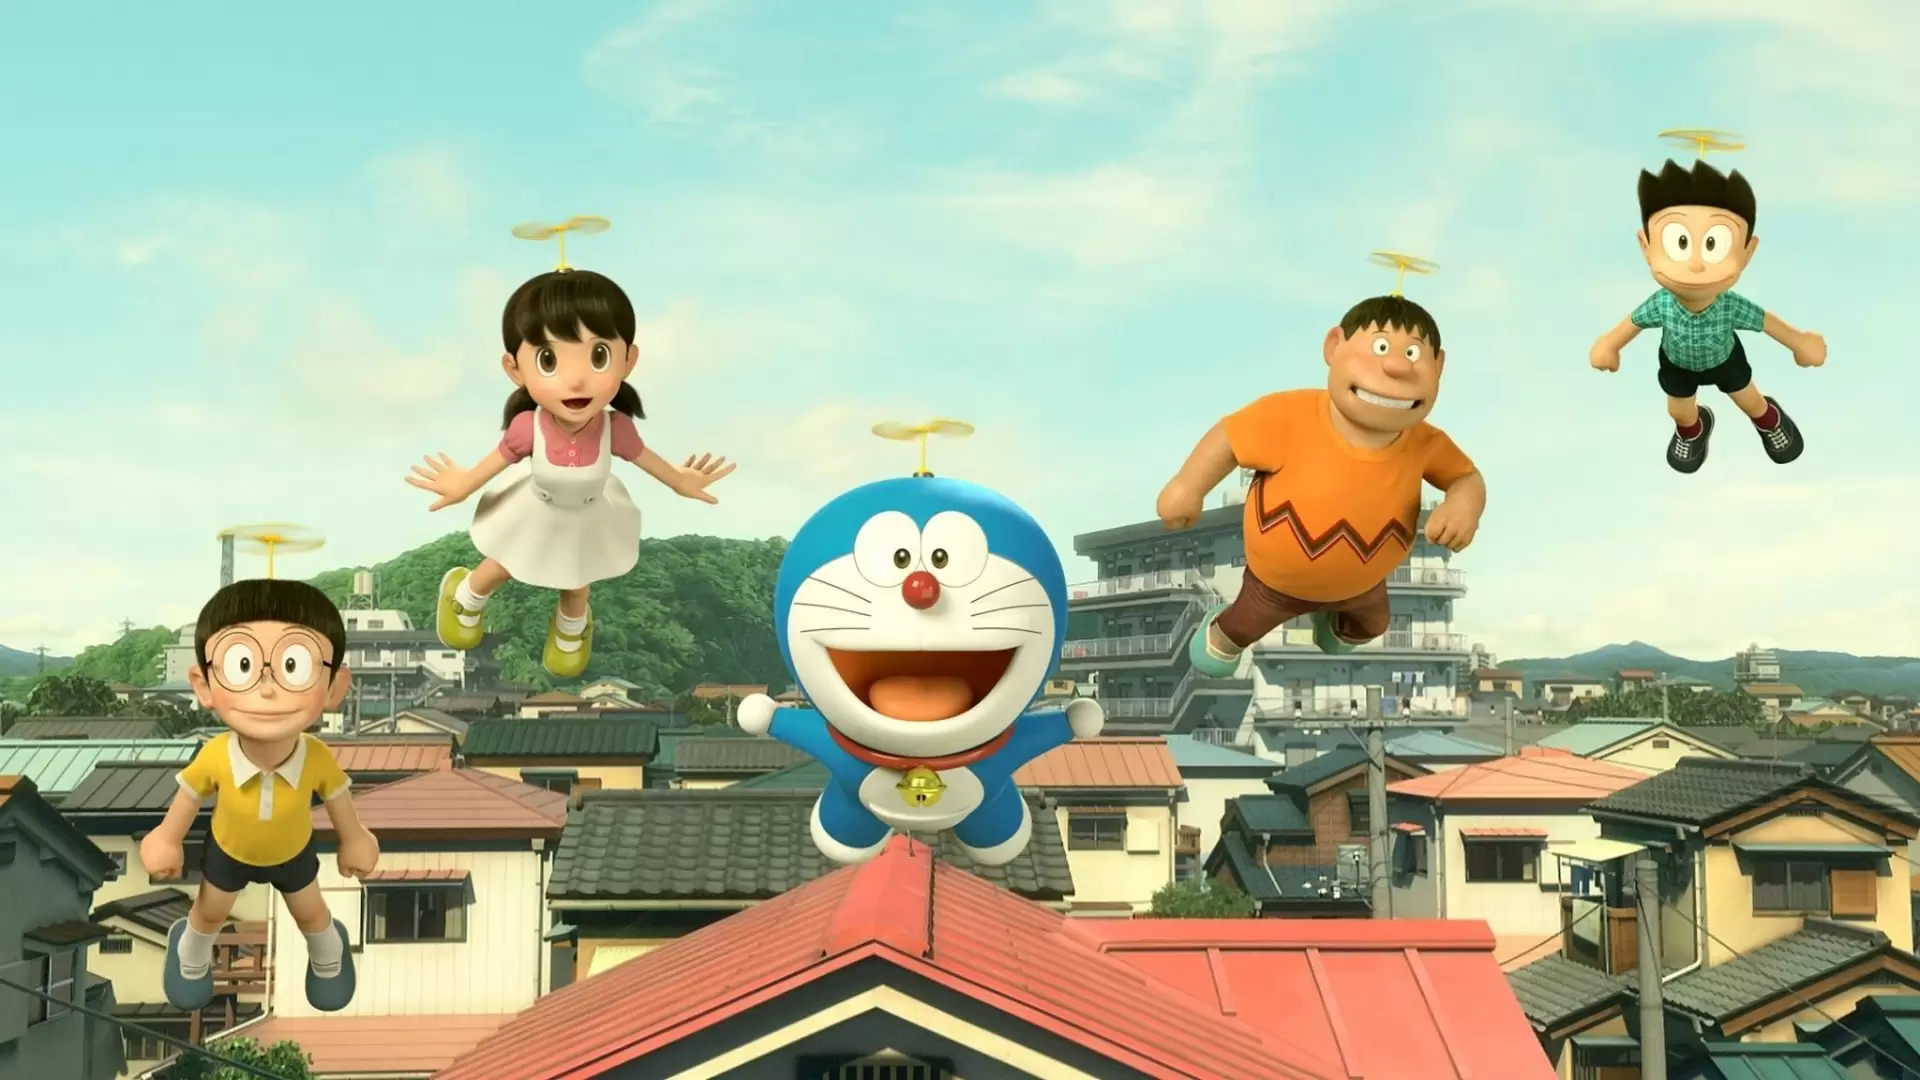 دانلود انیمه Stand by Me Doraemon 2014 (پیشم بمان دورامون)